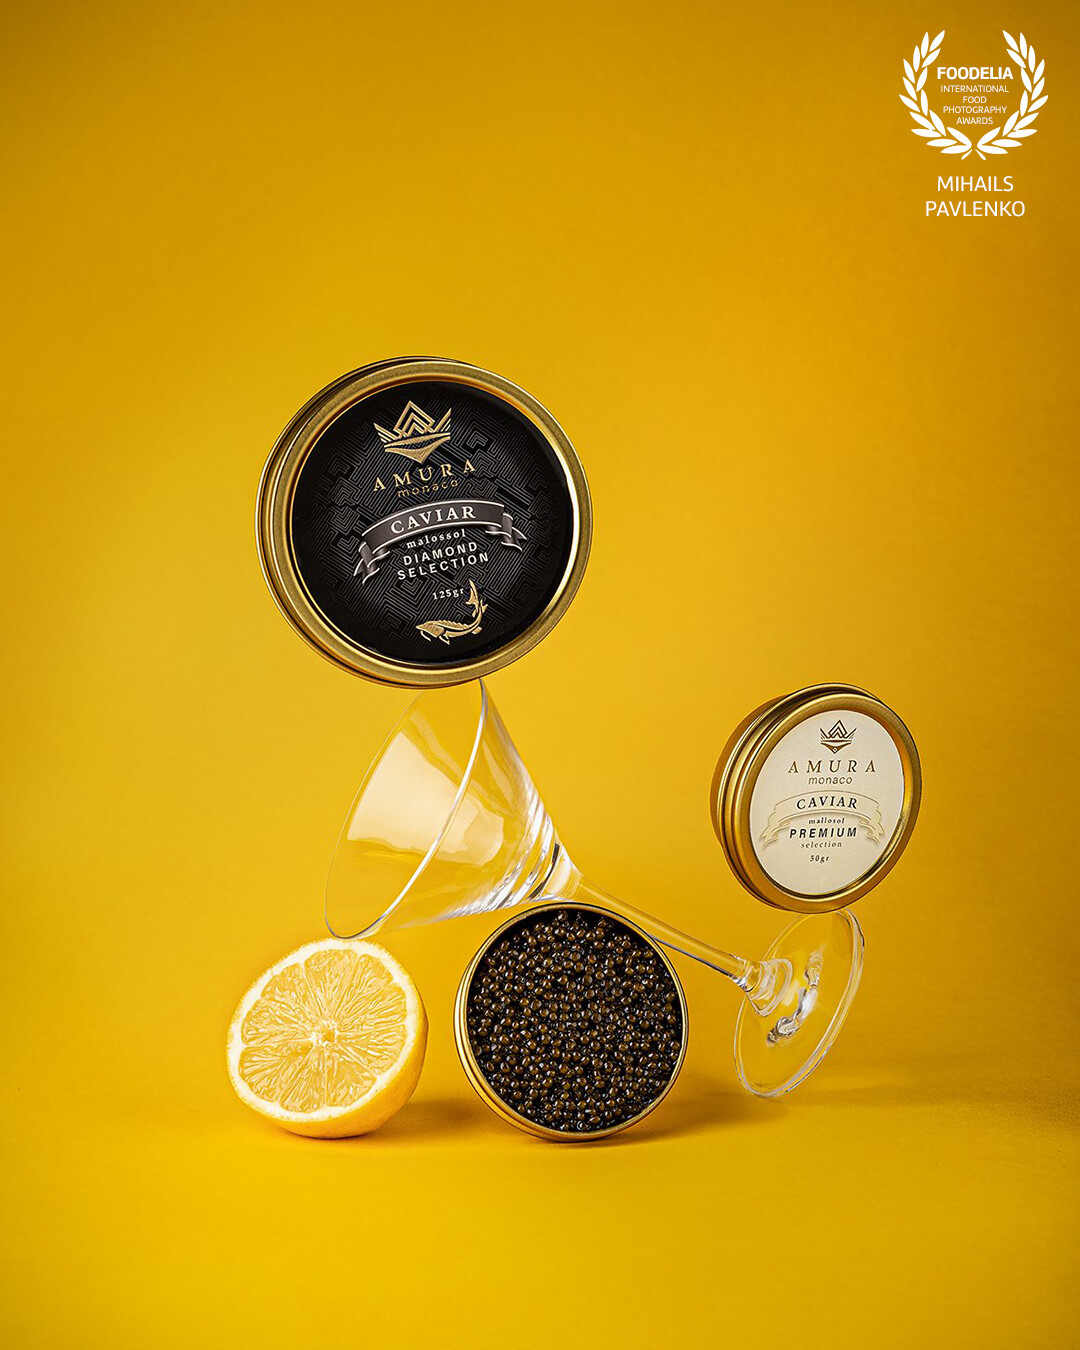 Luxury taste of the @amura_caviar black caviar.